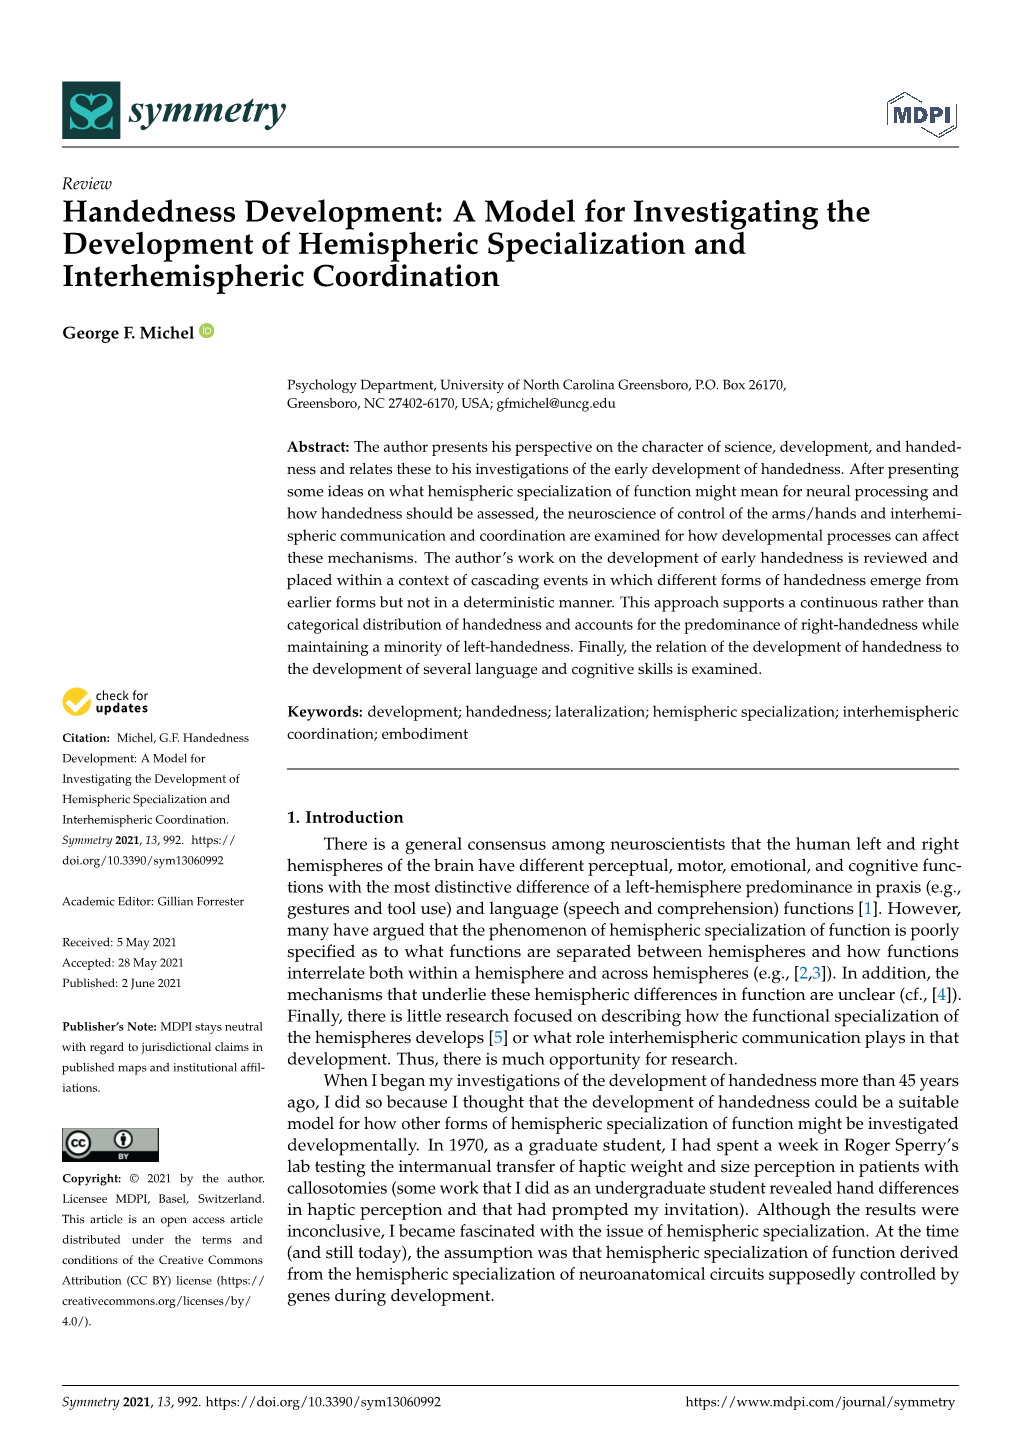 Handedness Development: a Model for Investigating the Development of Hemispheric Specialization and Interhemispheric Coordination